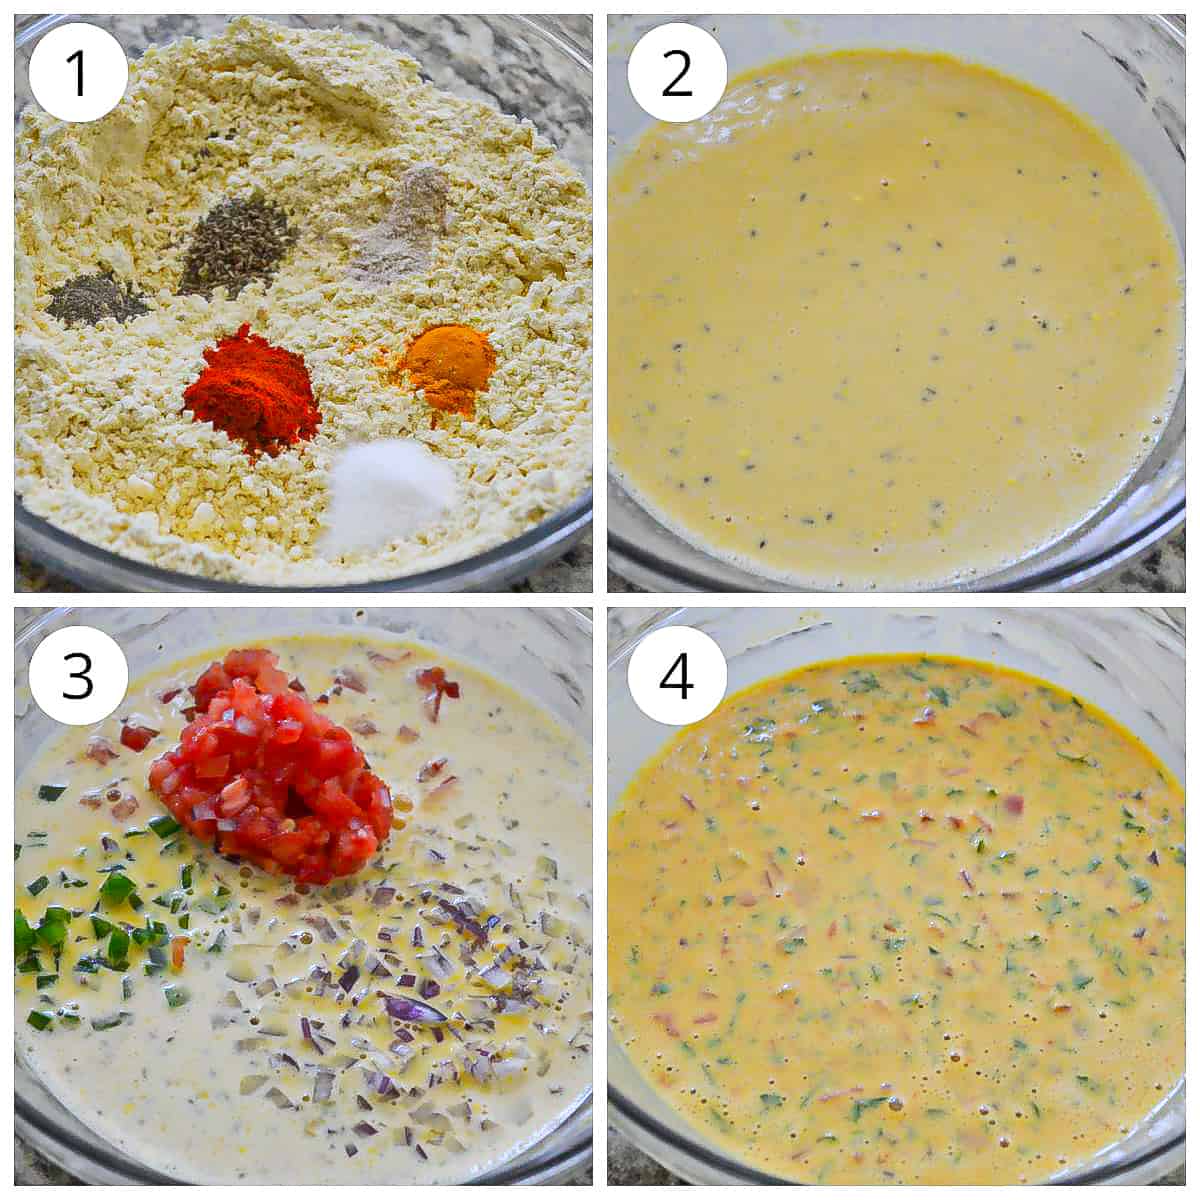 Steps to make besan chilla batter